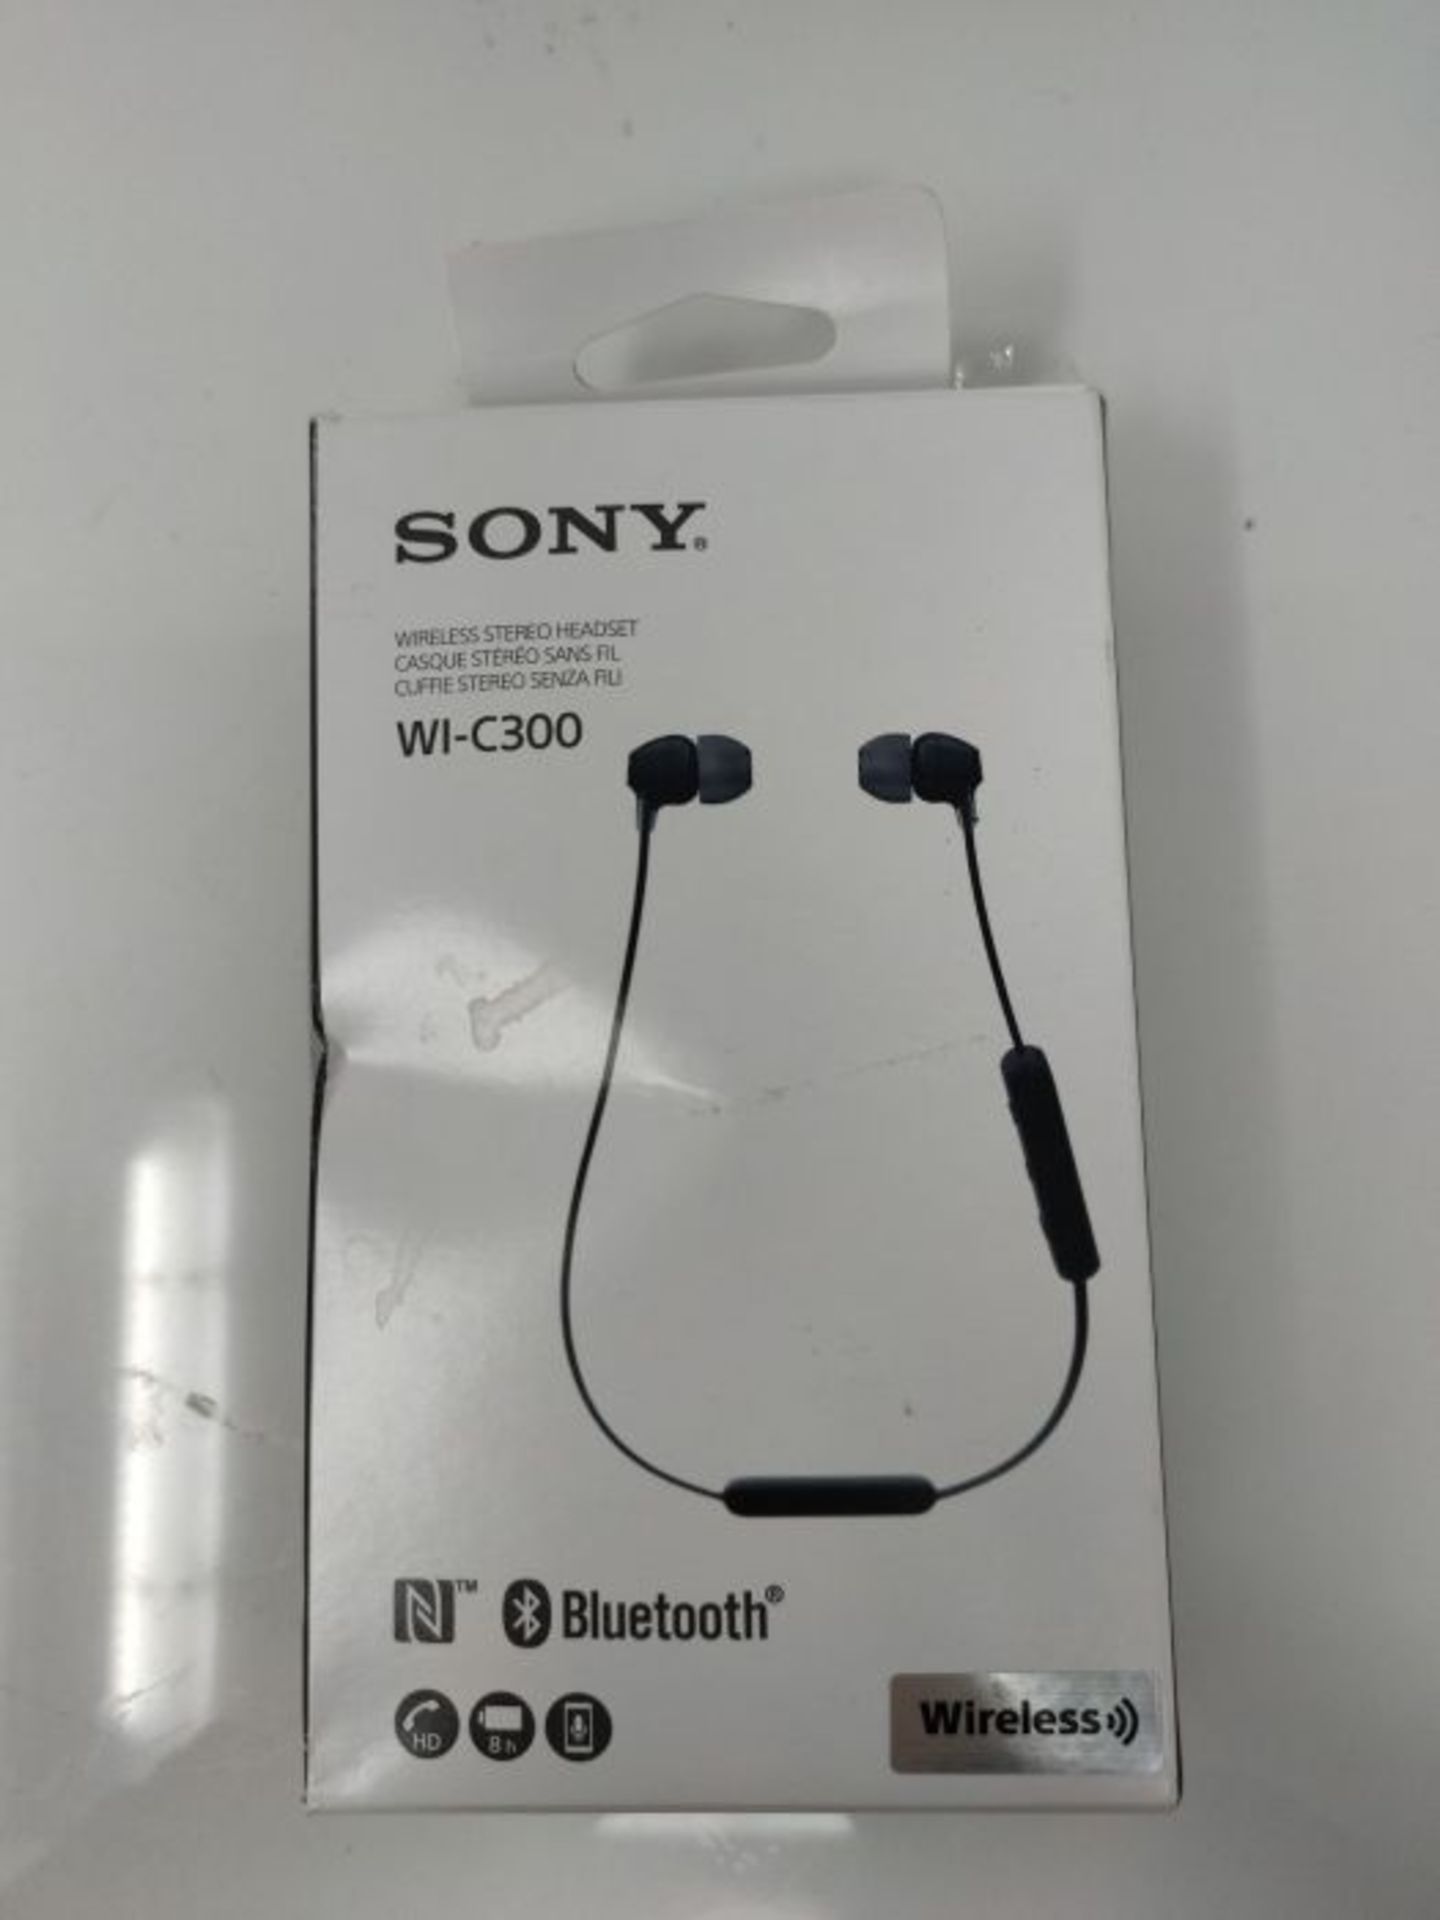 Sony WI-C300 Intrauricolare senza Fili, Bluetooth, Nero - Image 2 of 6